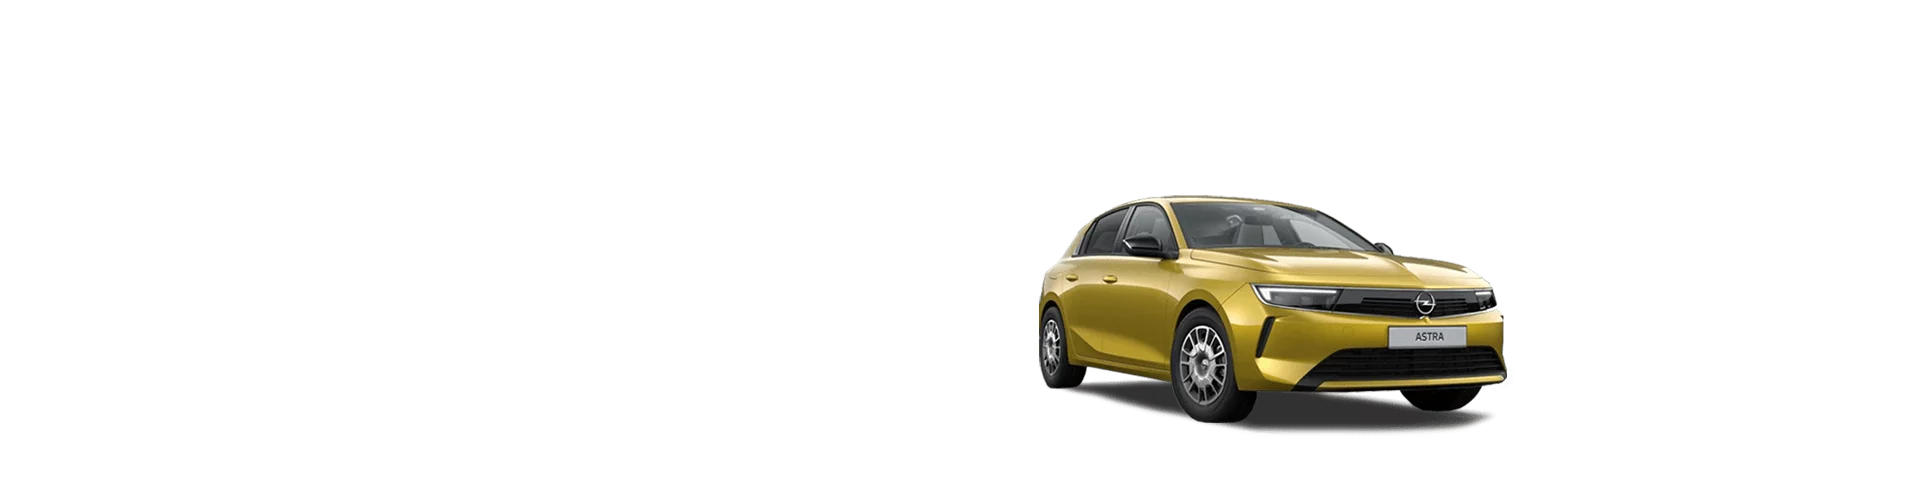 Opel Astra kurzfristig lieferbar